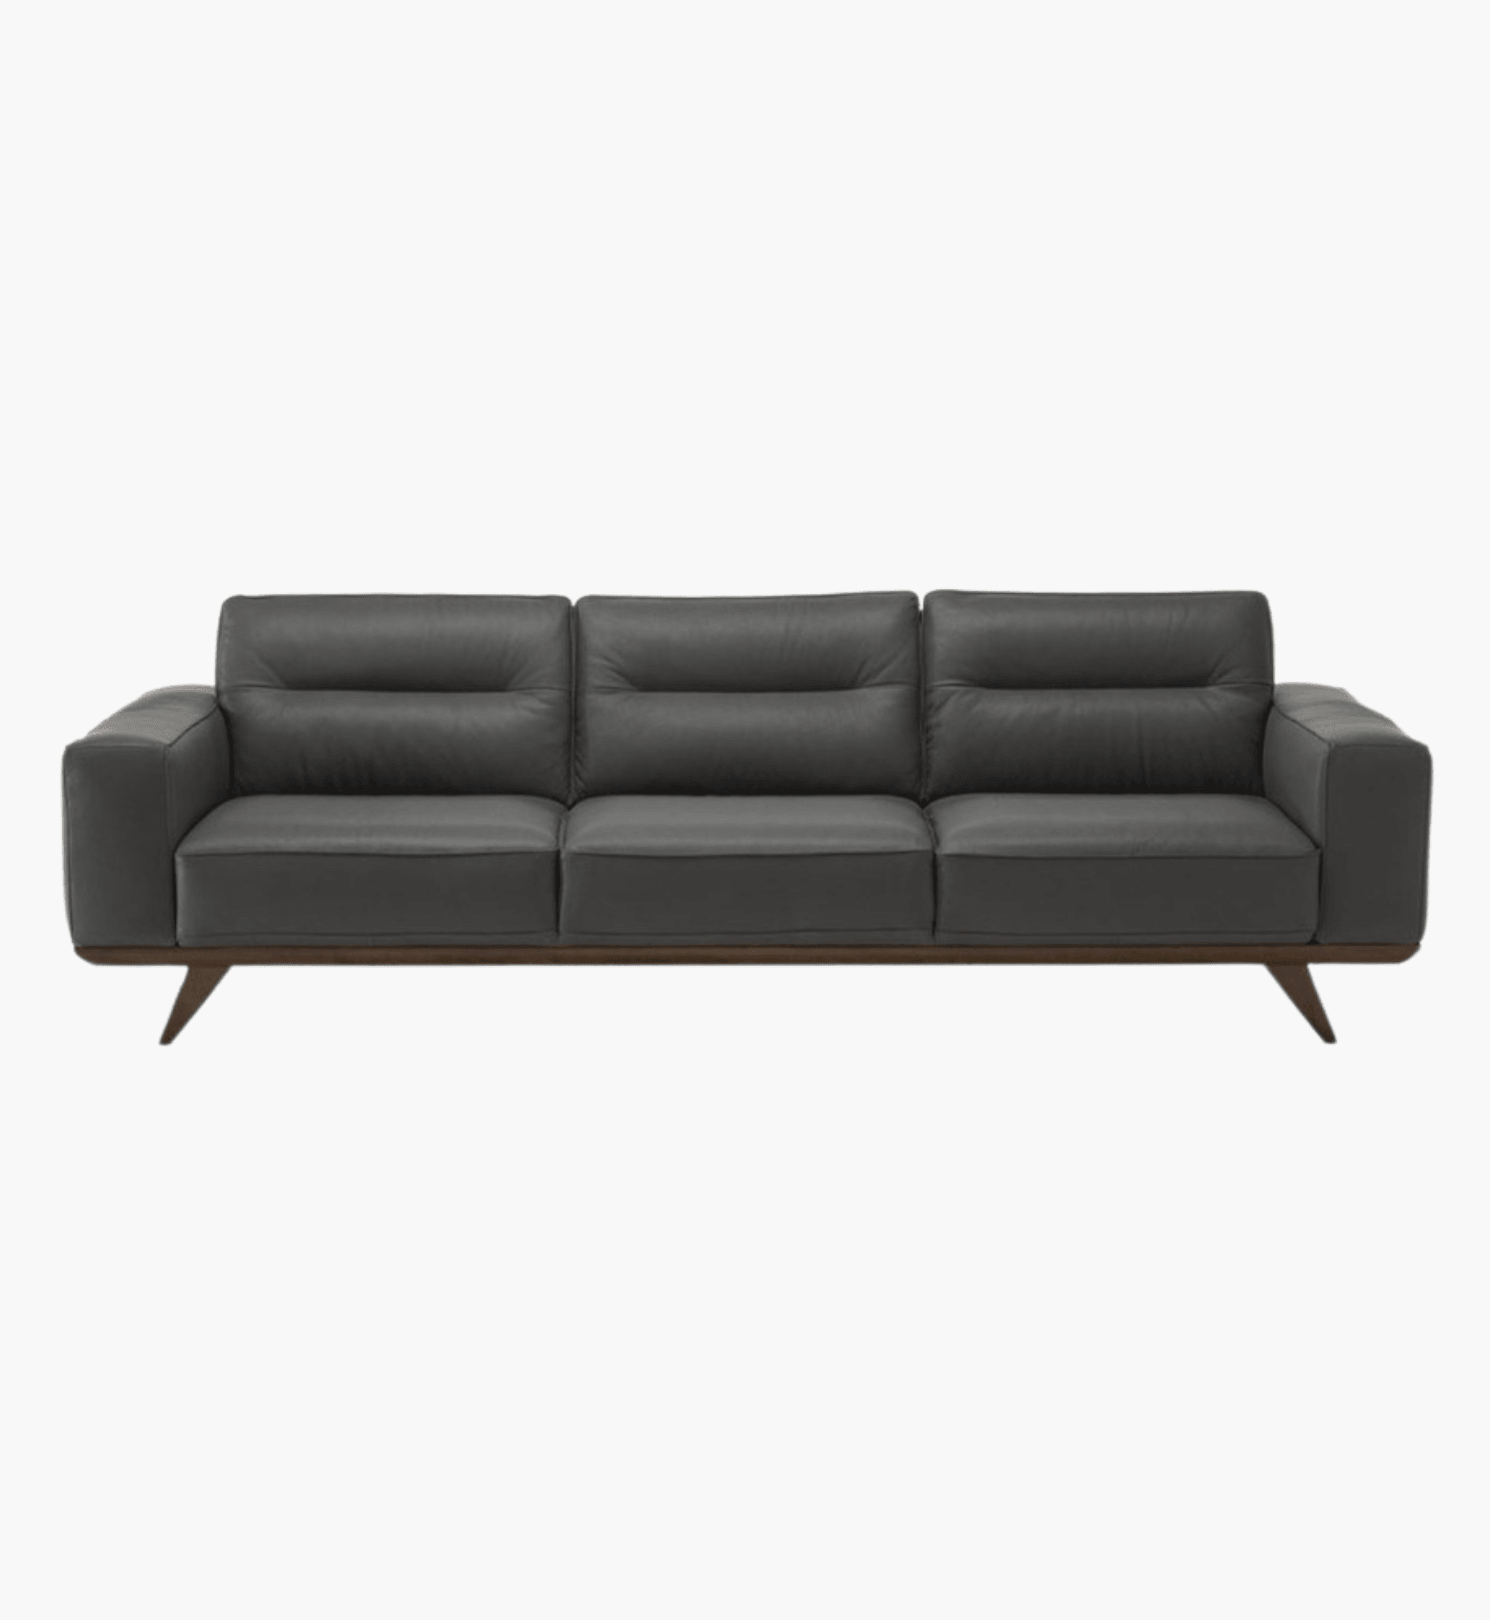 Adrenaline Large Sofa By NATUZZI - Euro Living Furniture